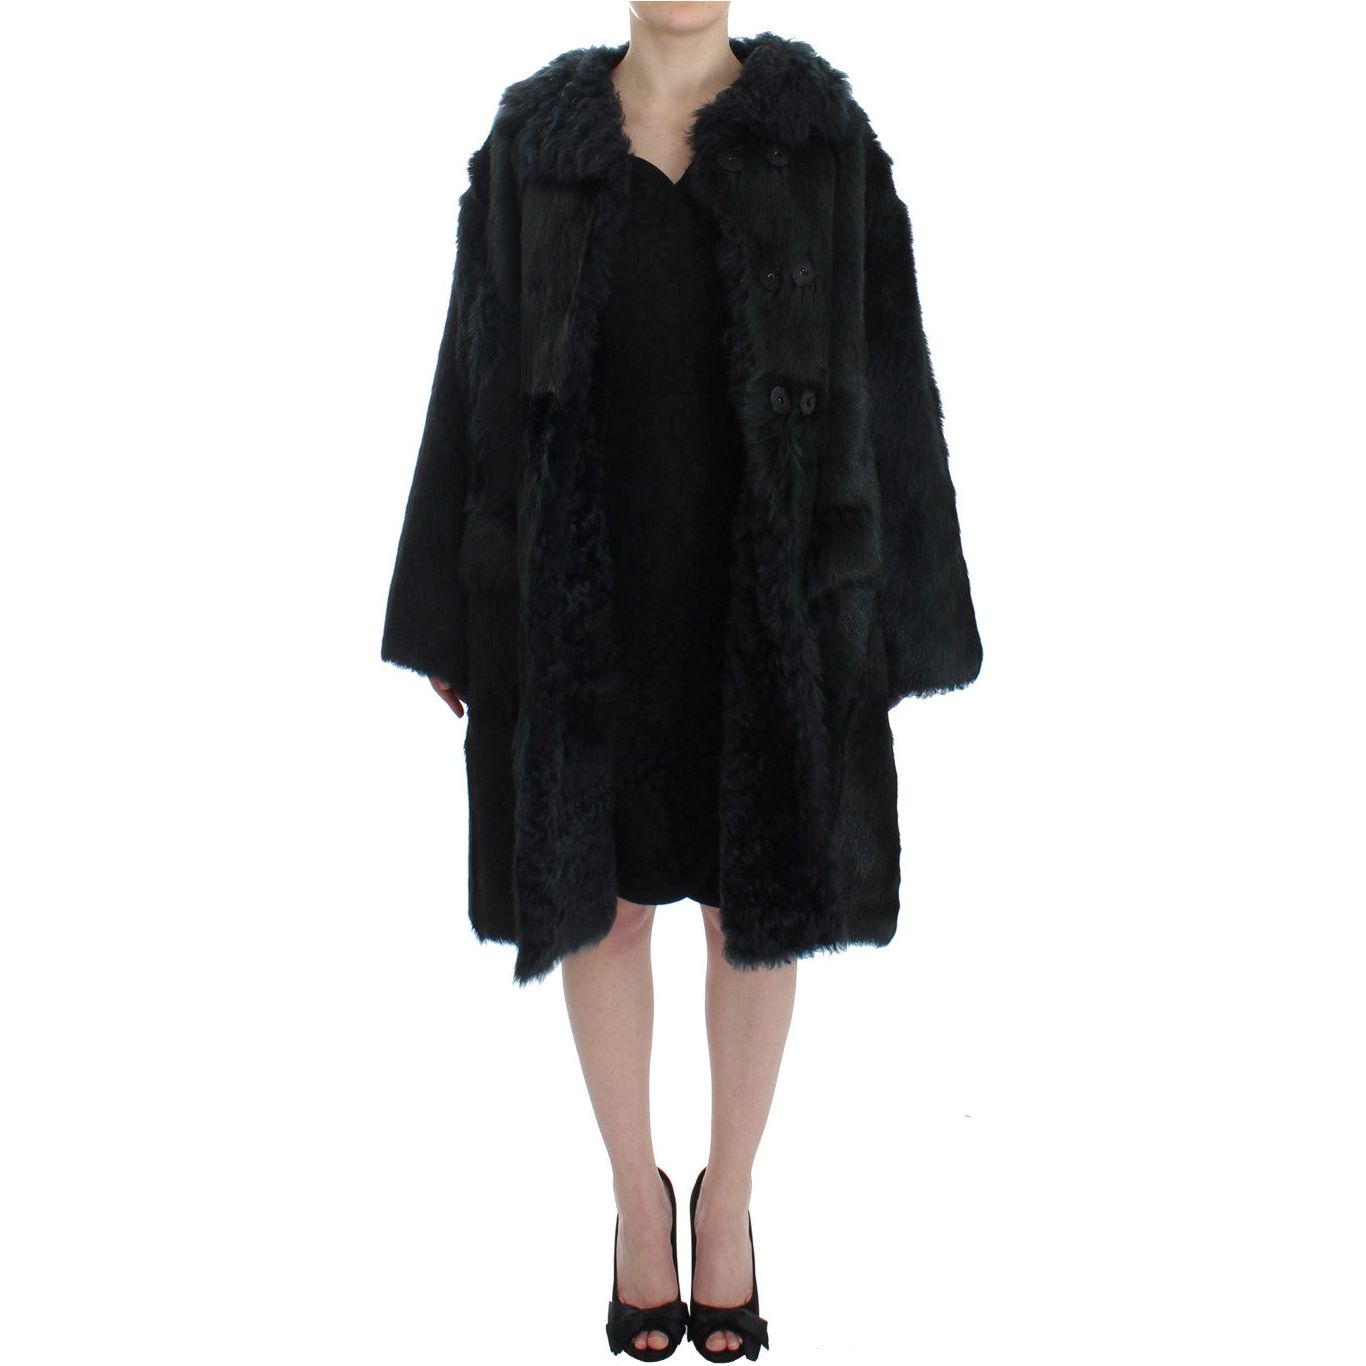 Dolce & Gabbana Exquisite Shearling Coat Jacket black-goat-fur-shearling-long-jacket-coat 62390-black-goat-fur-shearling-long-jacket-coat-6.jpg